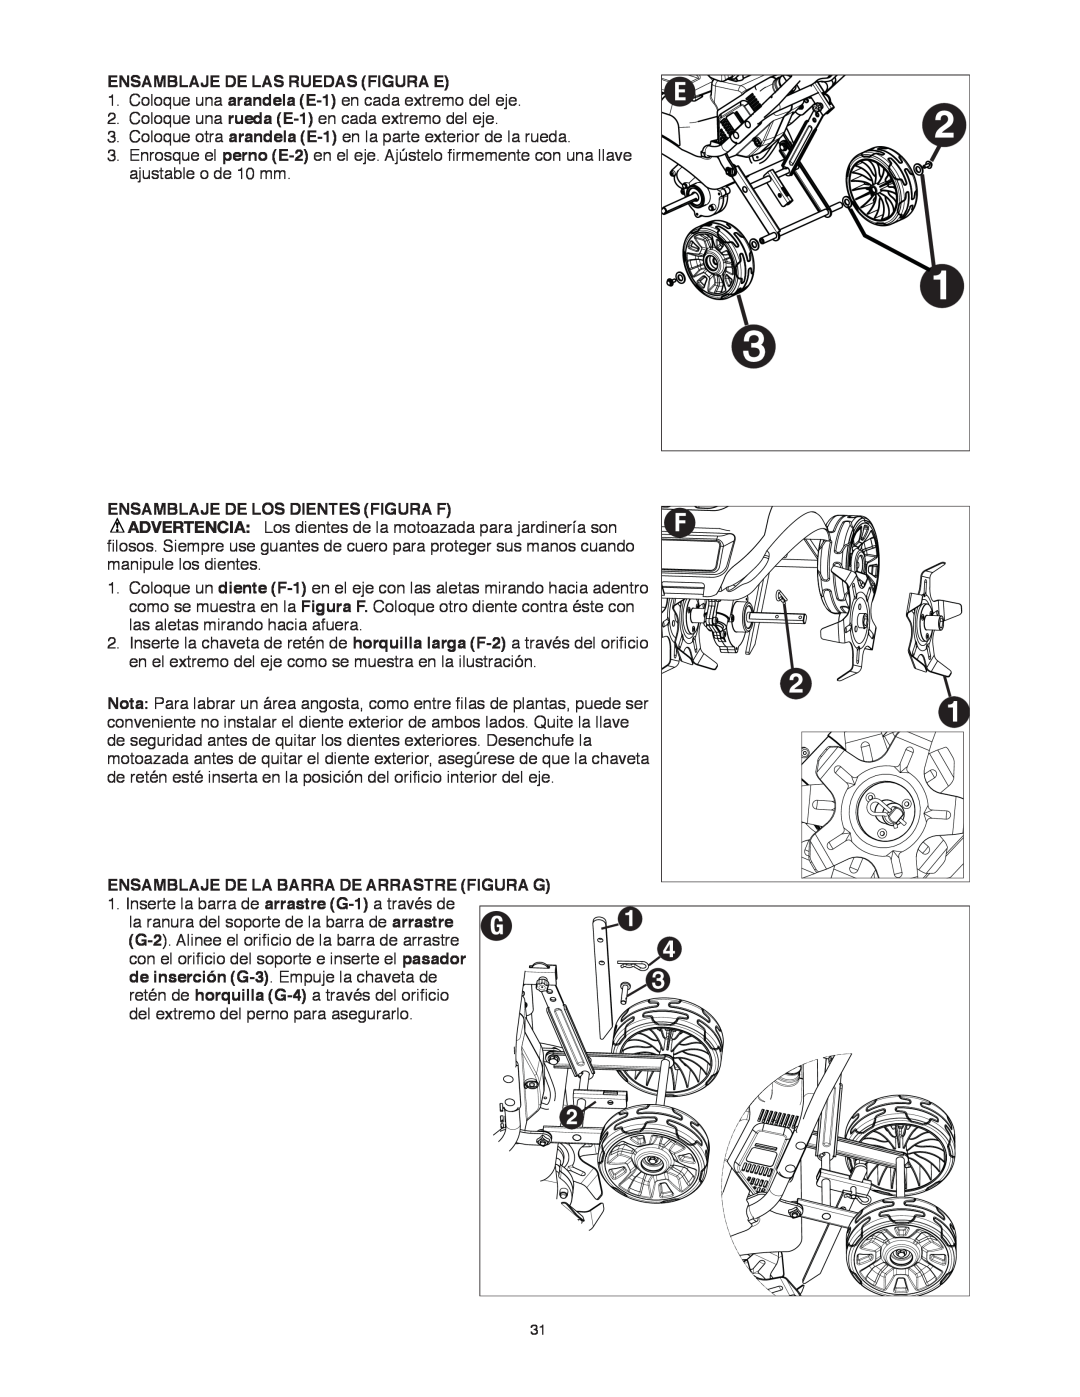 Black & Decker TL10 instruction manual Ensamblaje De Las Ruedas Figura E, Ensamblaje De Los Dientes Figura F 